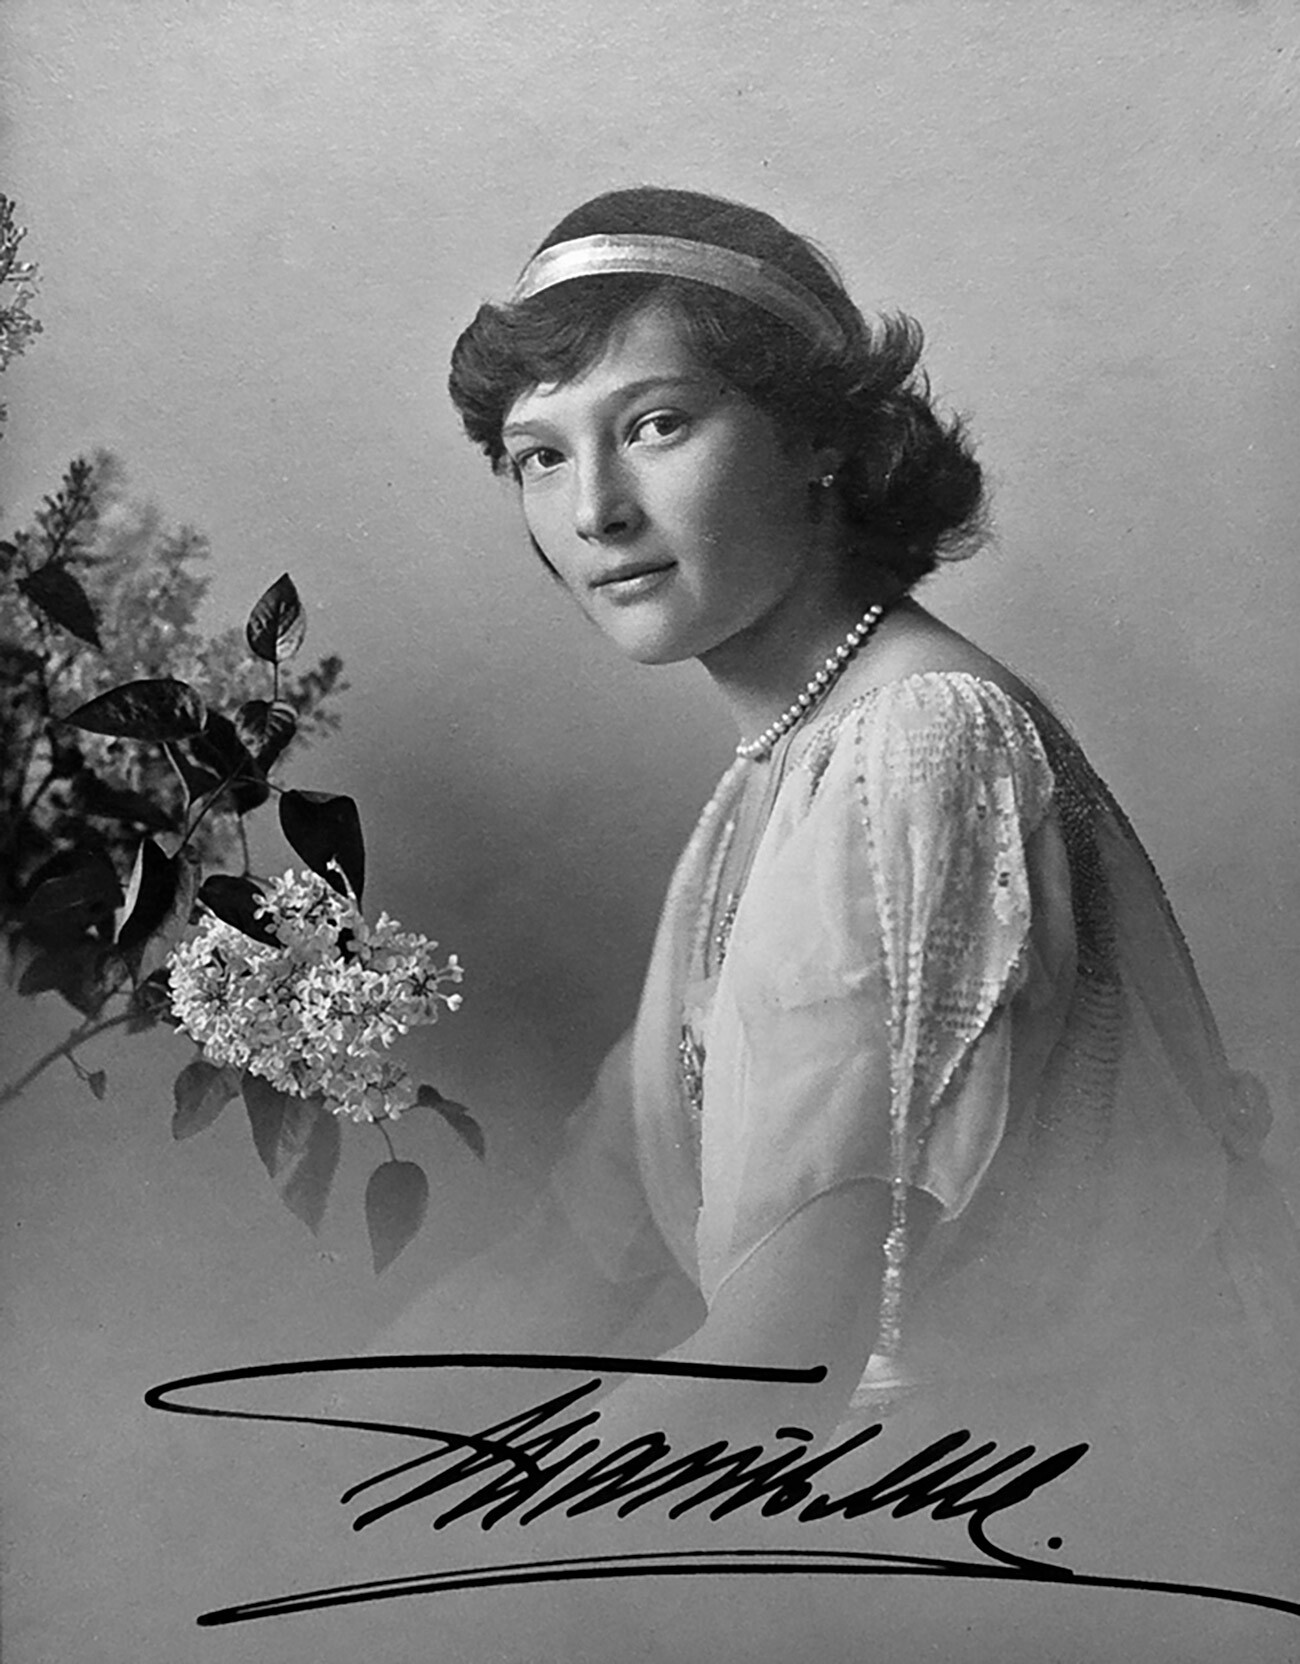 La granduchessa Tatjana Romanova (1897-1918)

